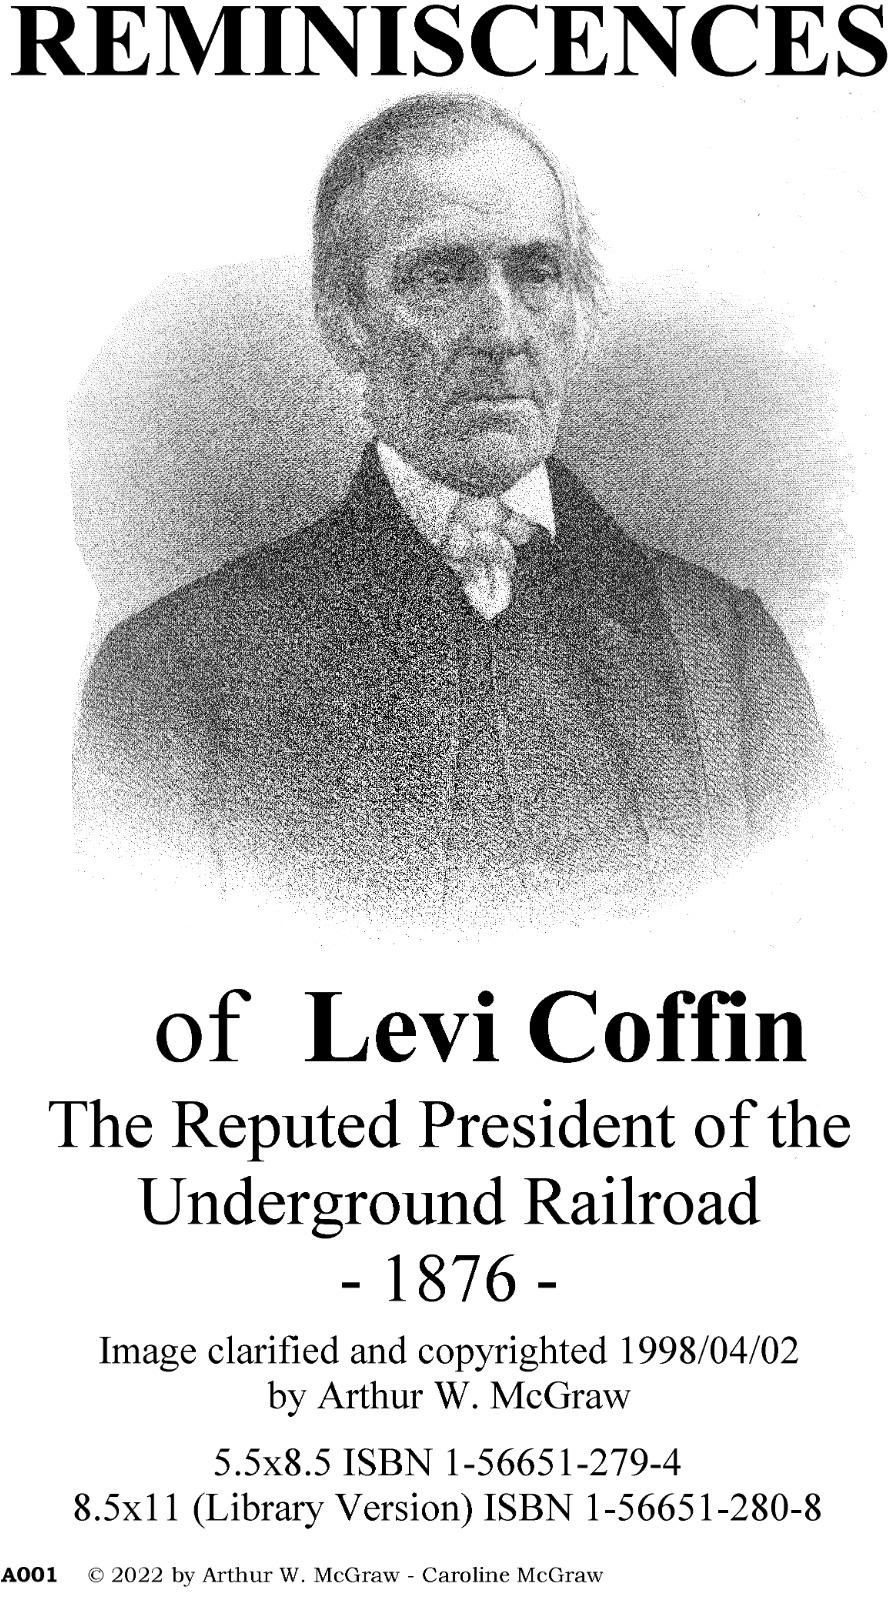 Reminiscences of Levi Coffin (anti-slave) - 1876 - Levi Coffin - pdf